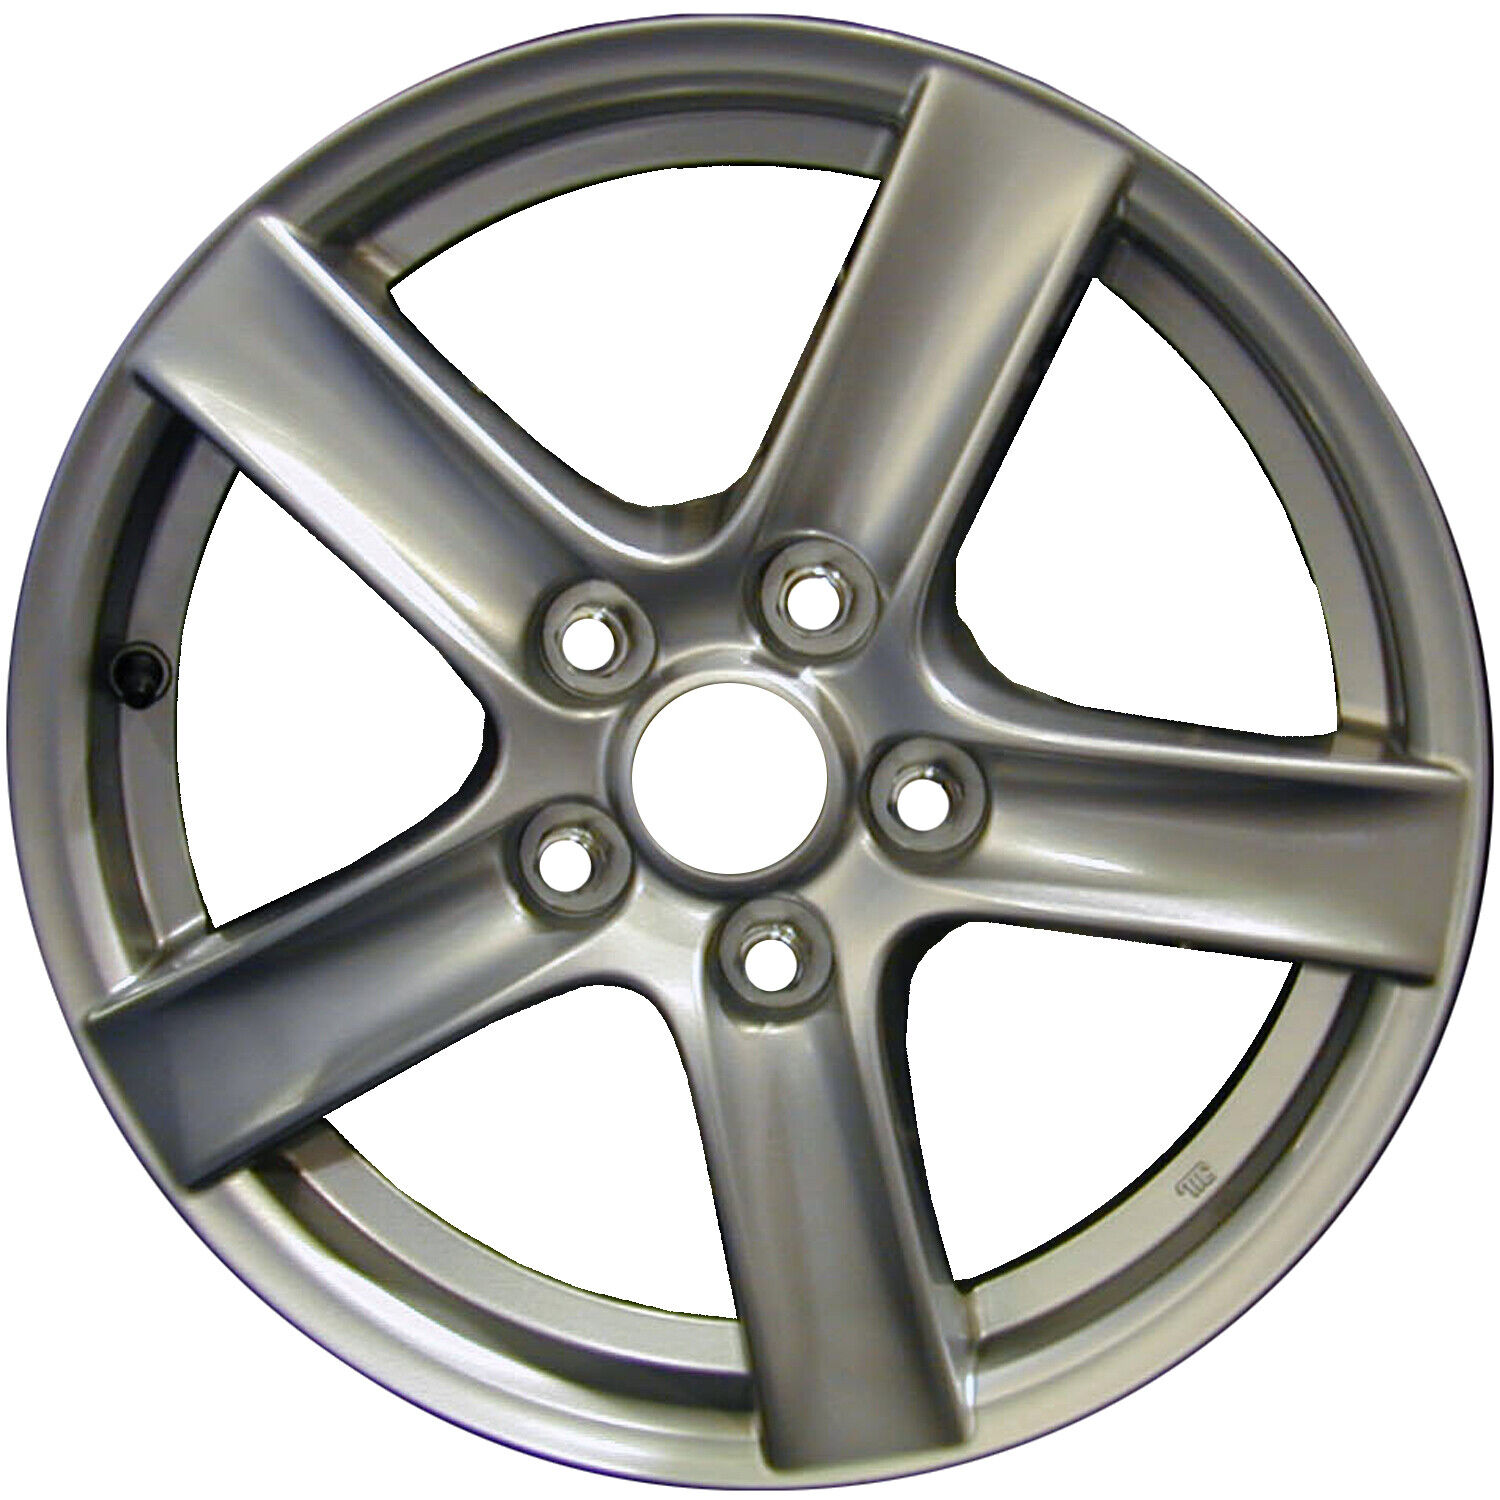 Refurbished 16x6.5 Painted Silver Wheel fits 2006-2010 Mazda Mx5 Miata 560-64886